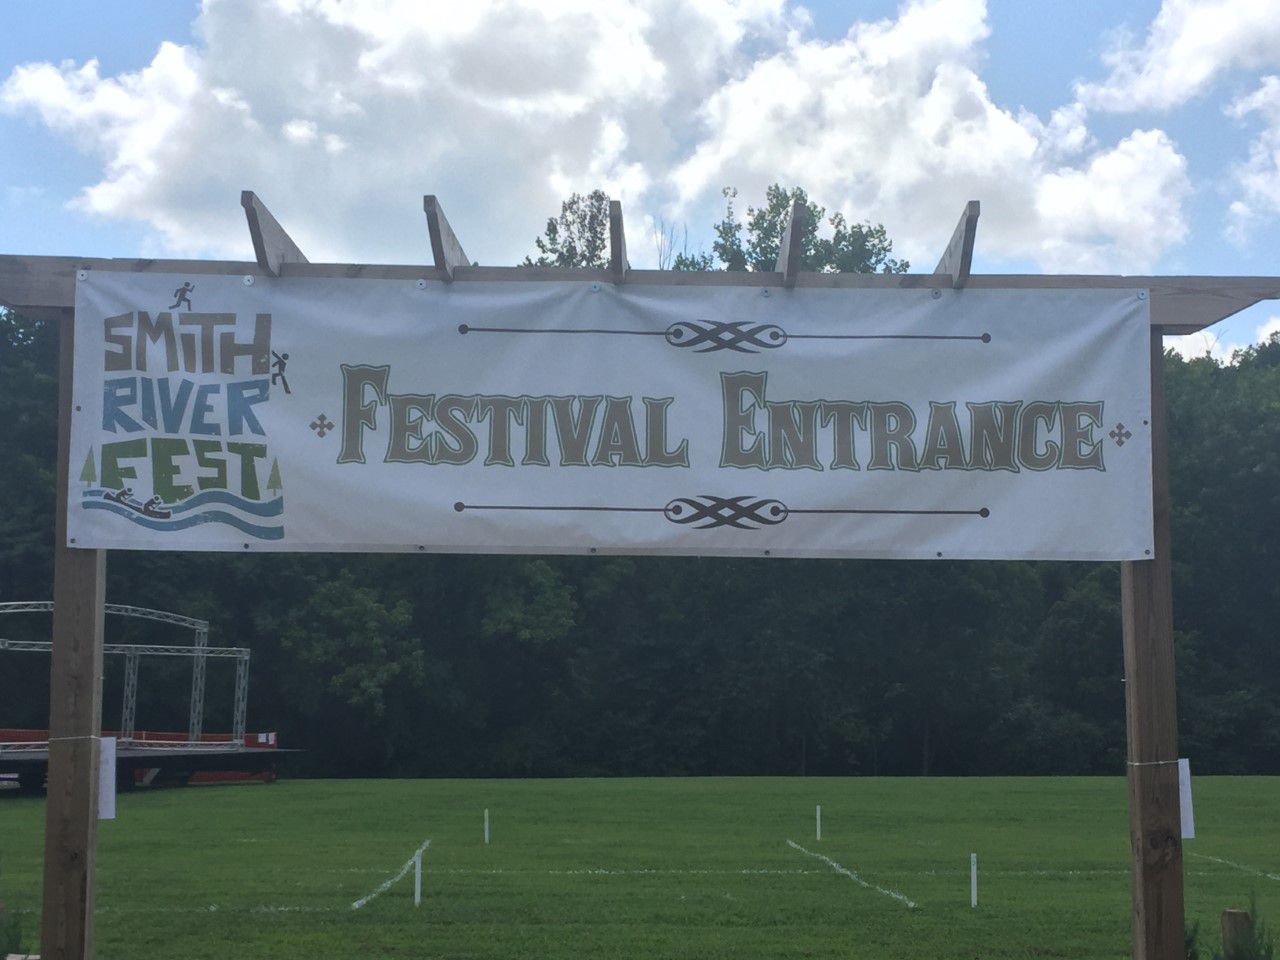 Henry County community preparing for Smith River Fest